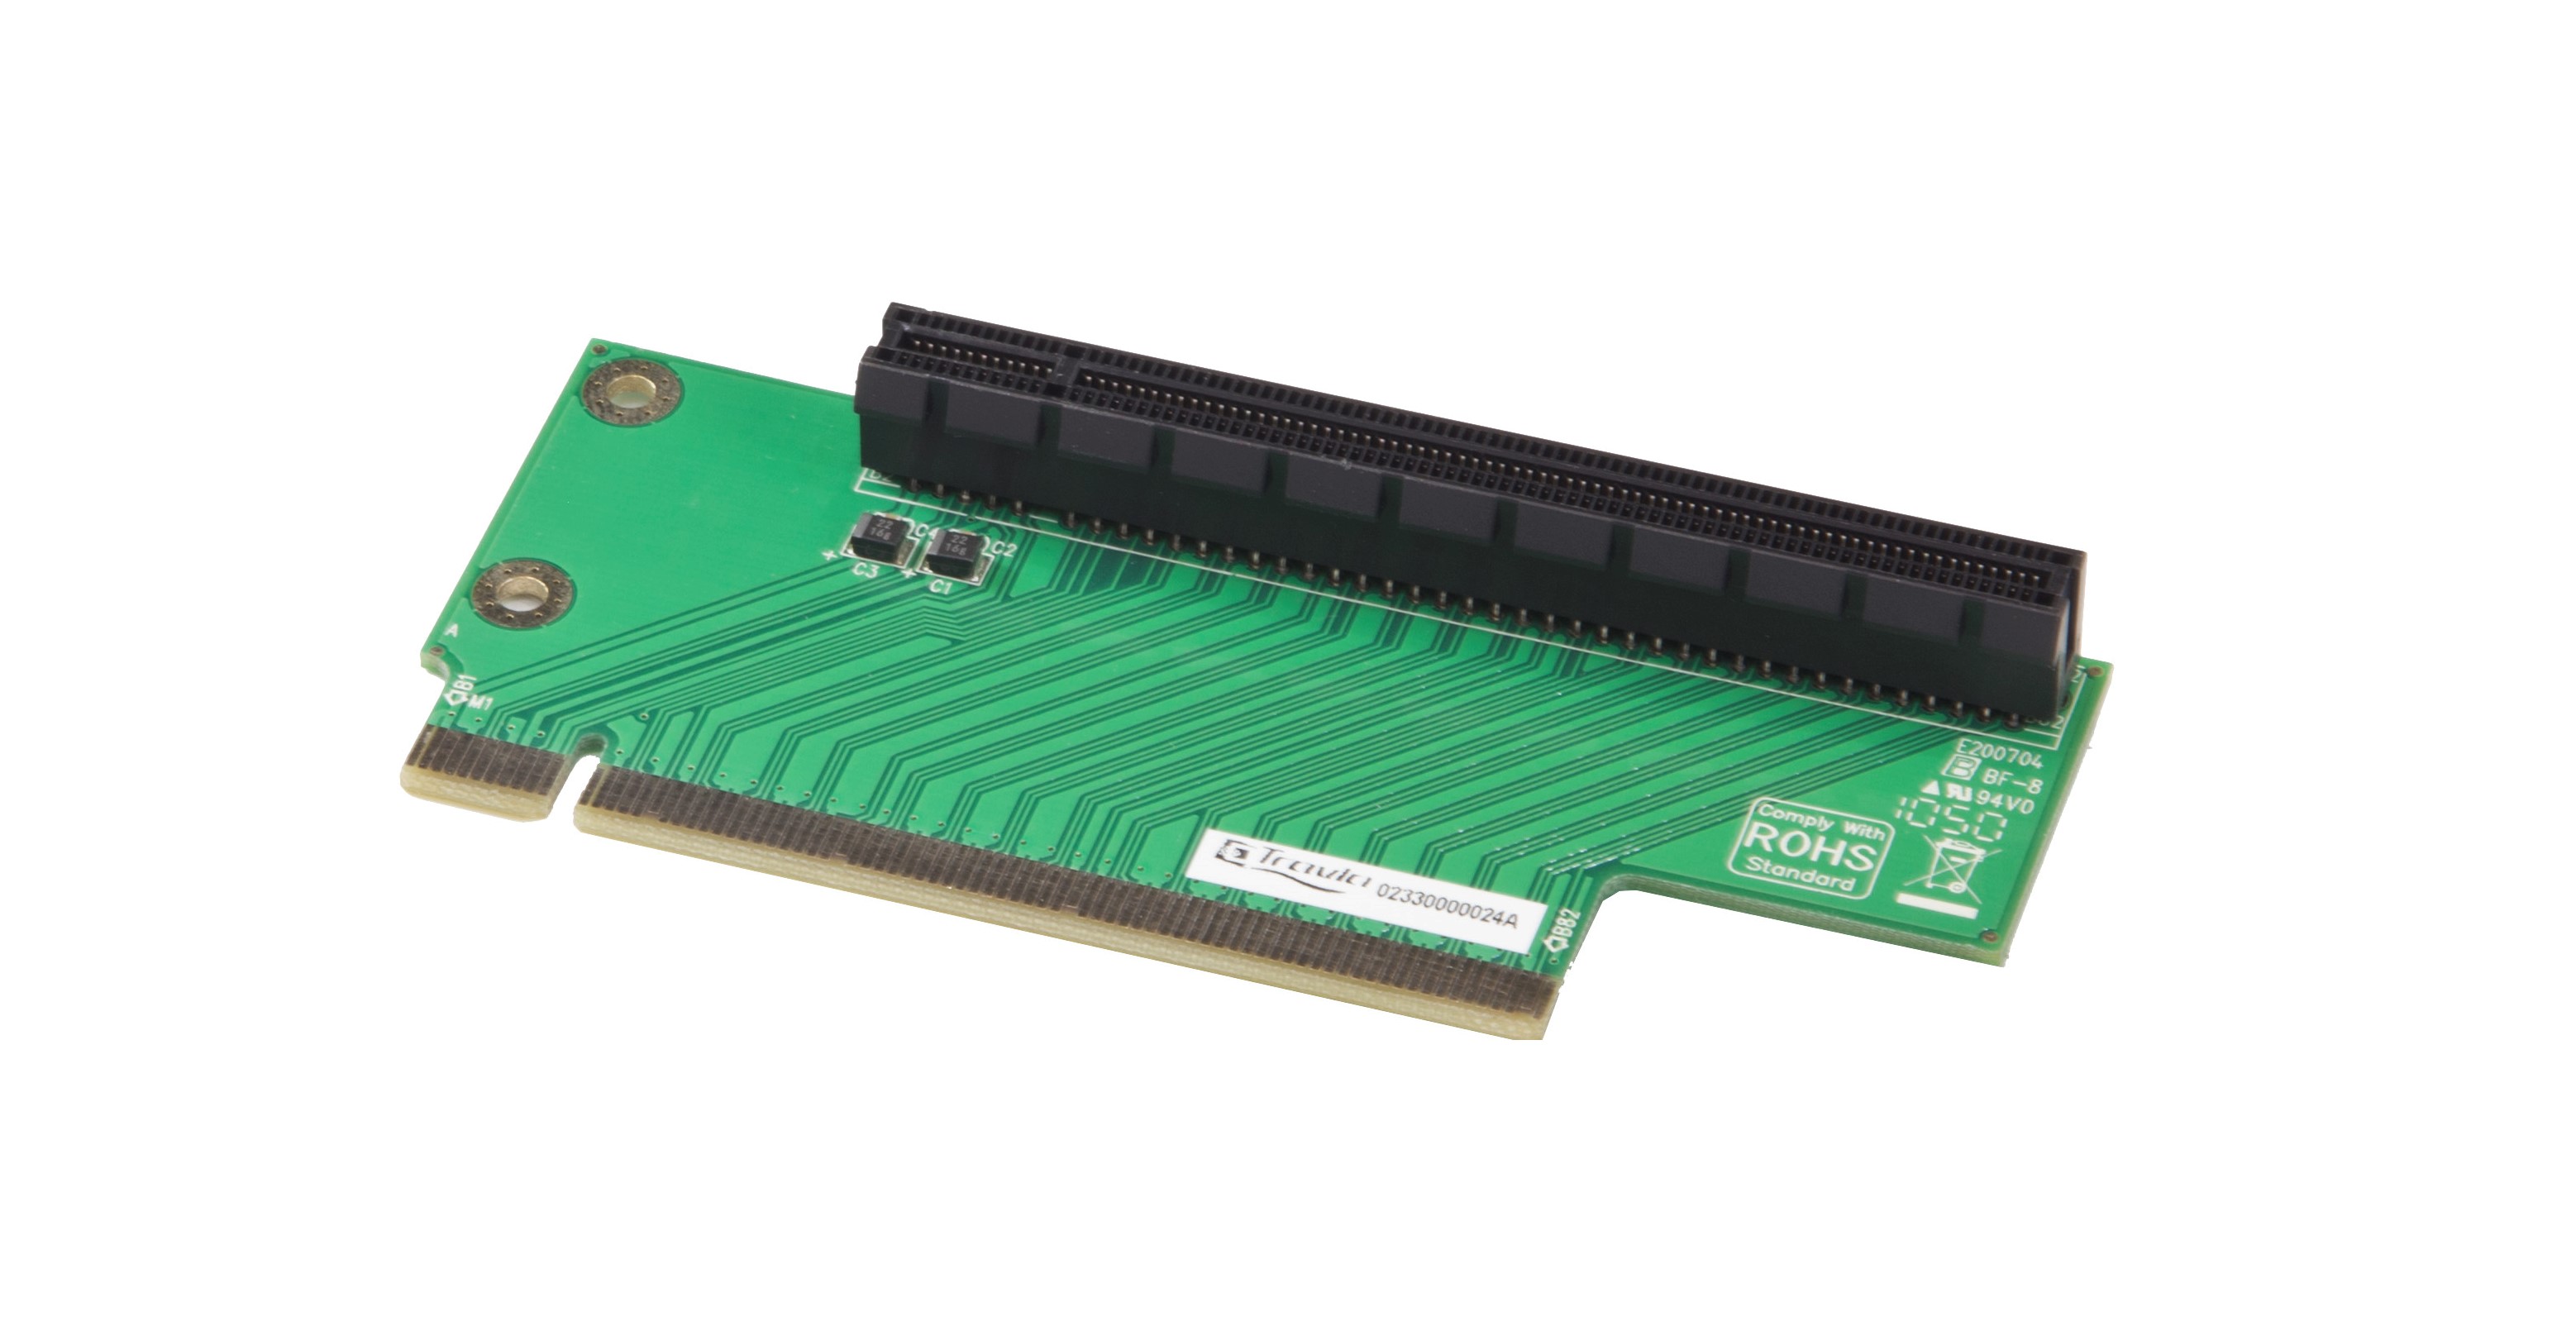 TAWA-T9120 PCIe X16 Riser Card  |Products|Accessories|PCI-Express Riser Card